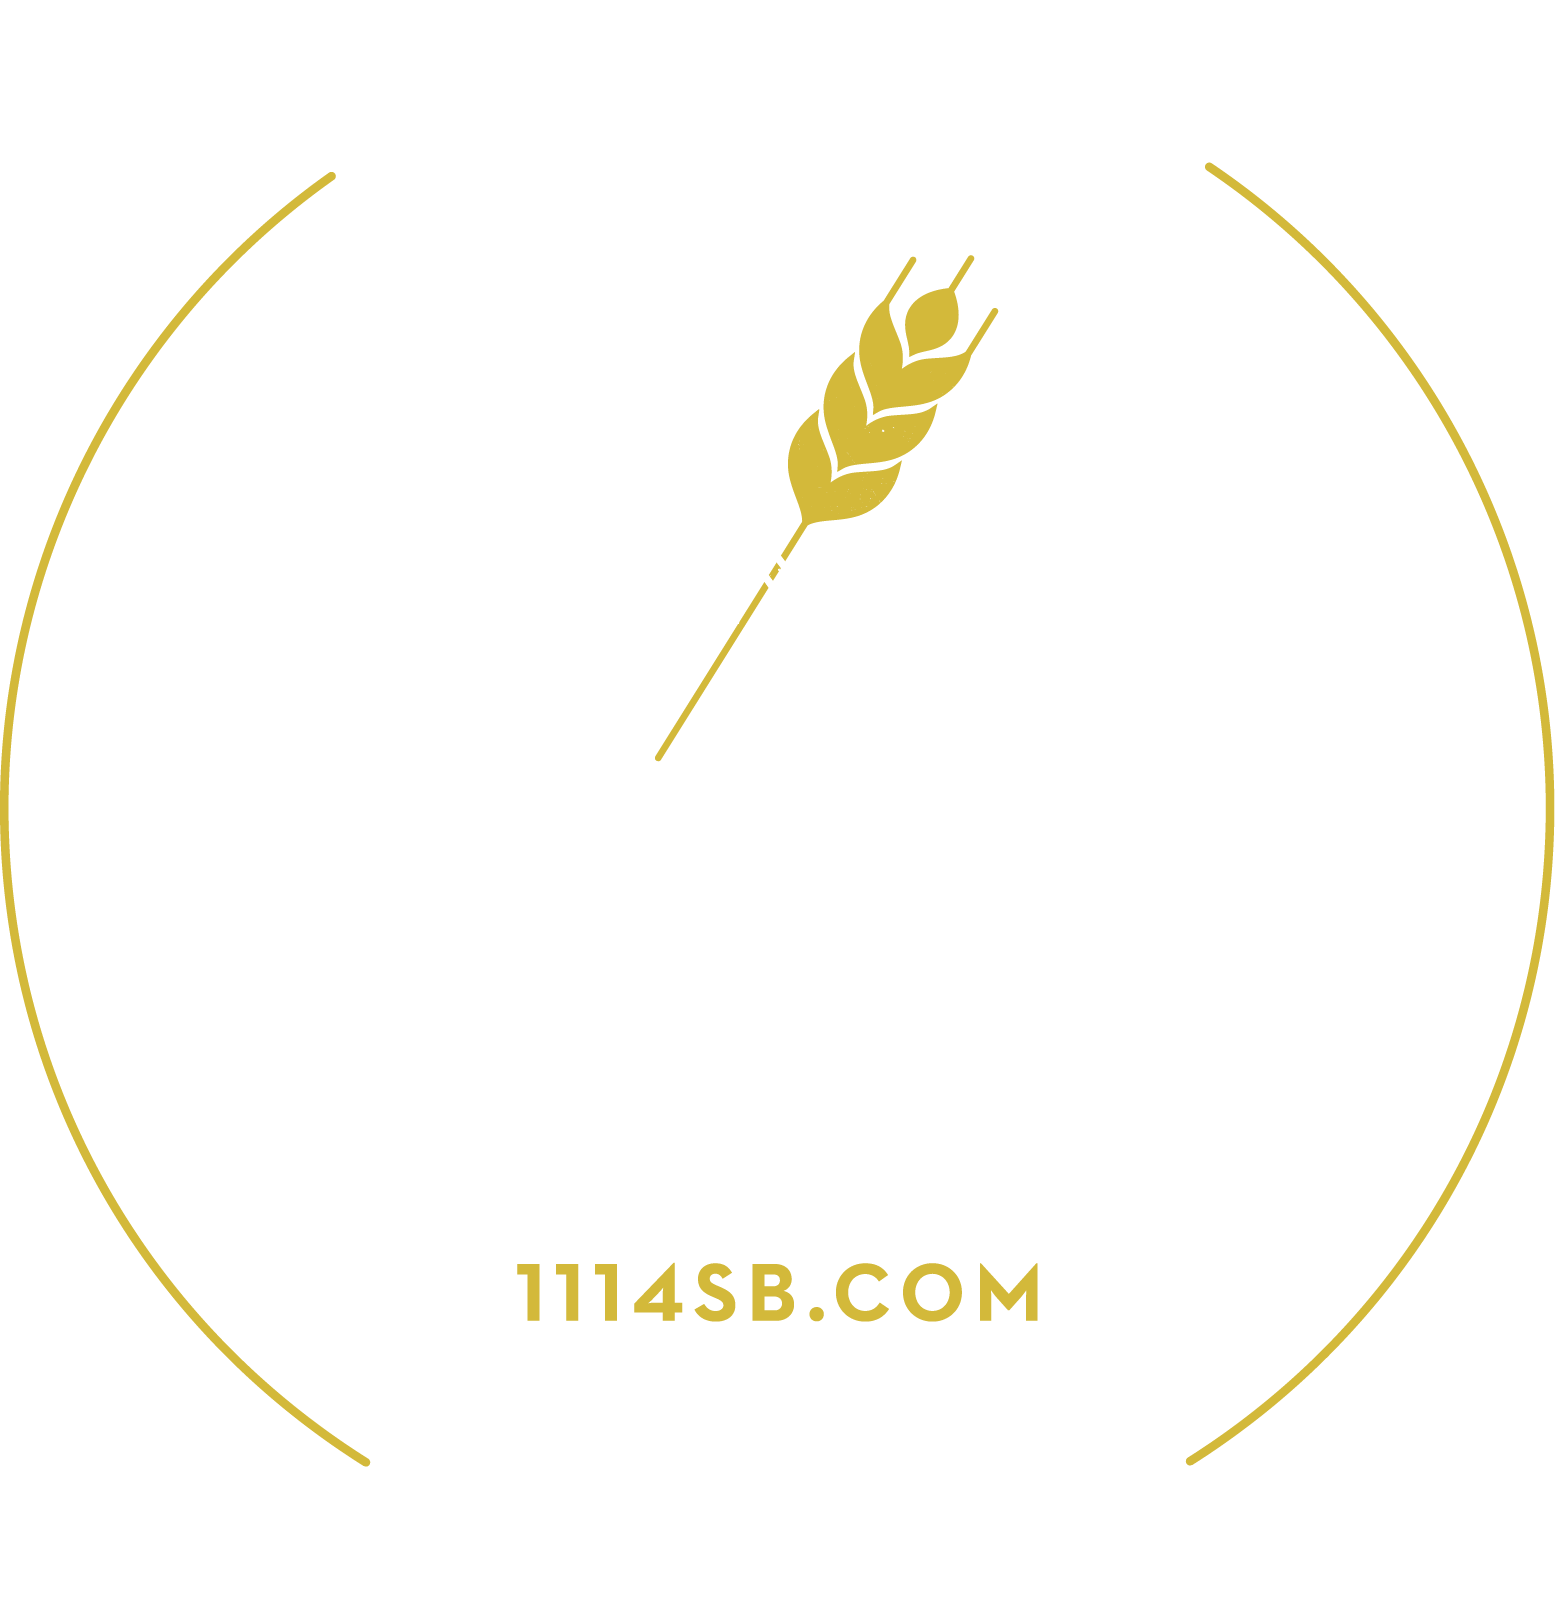 Eleven 14 Sports Bar & Games